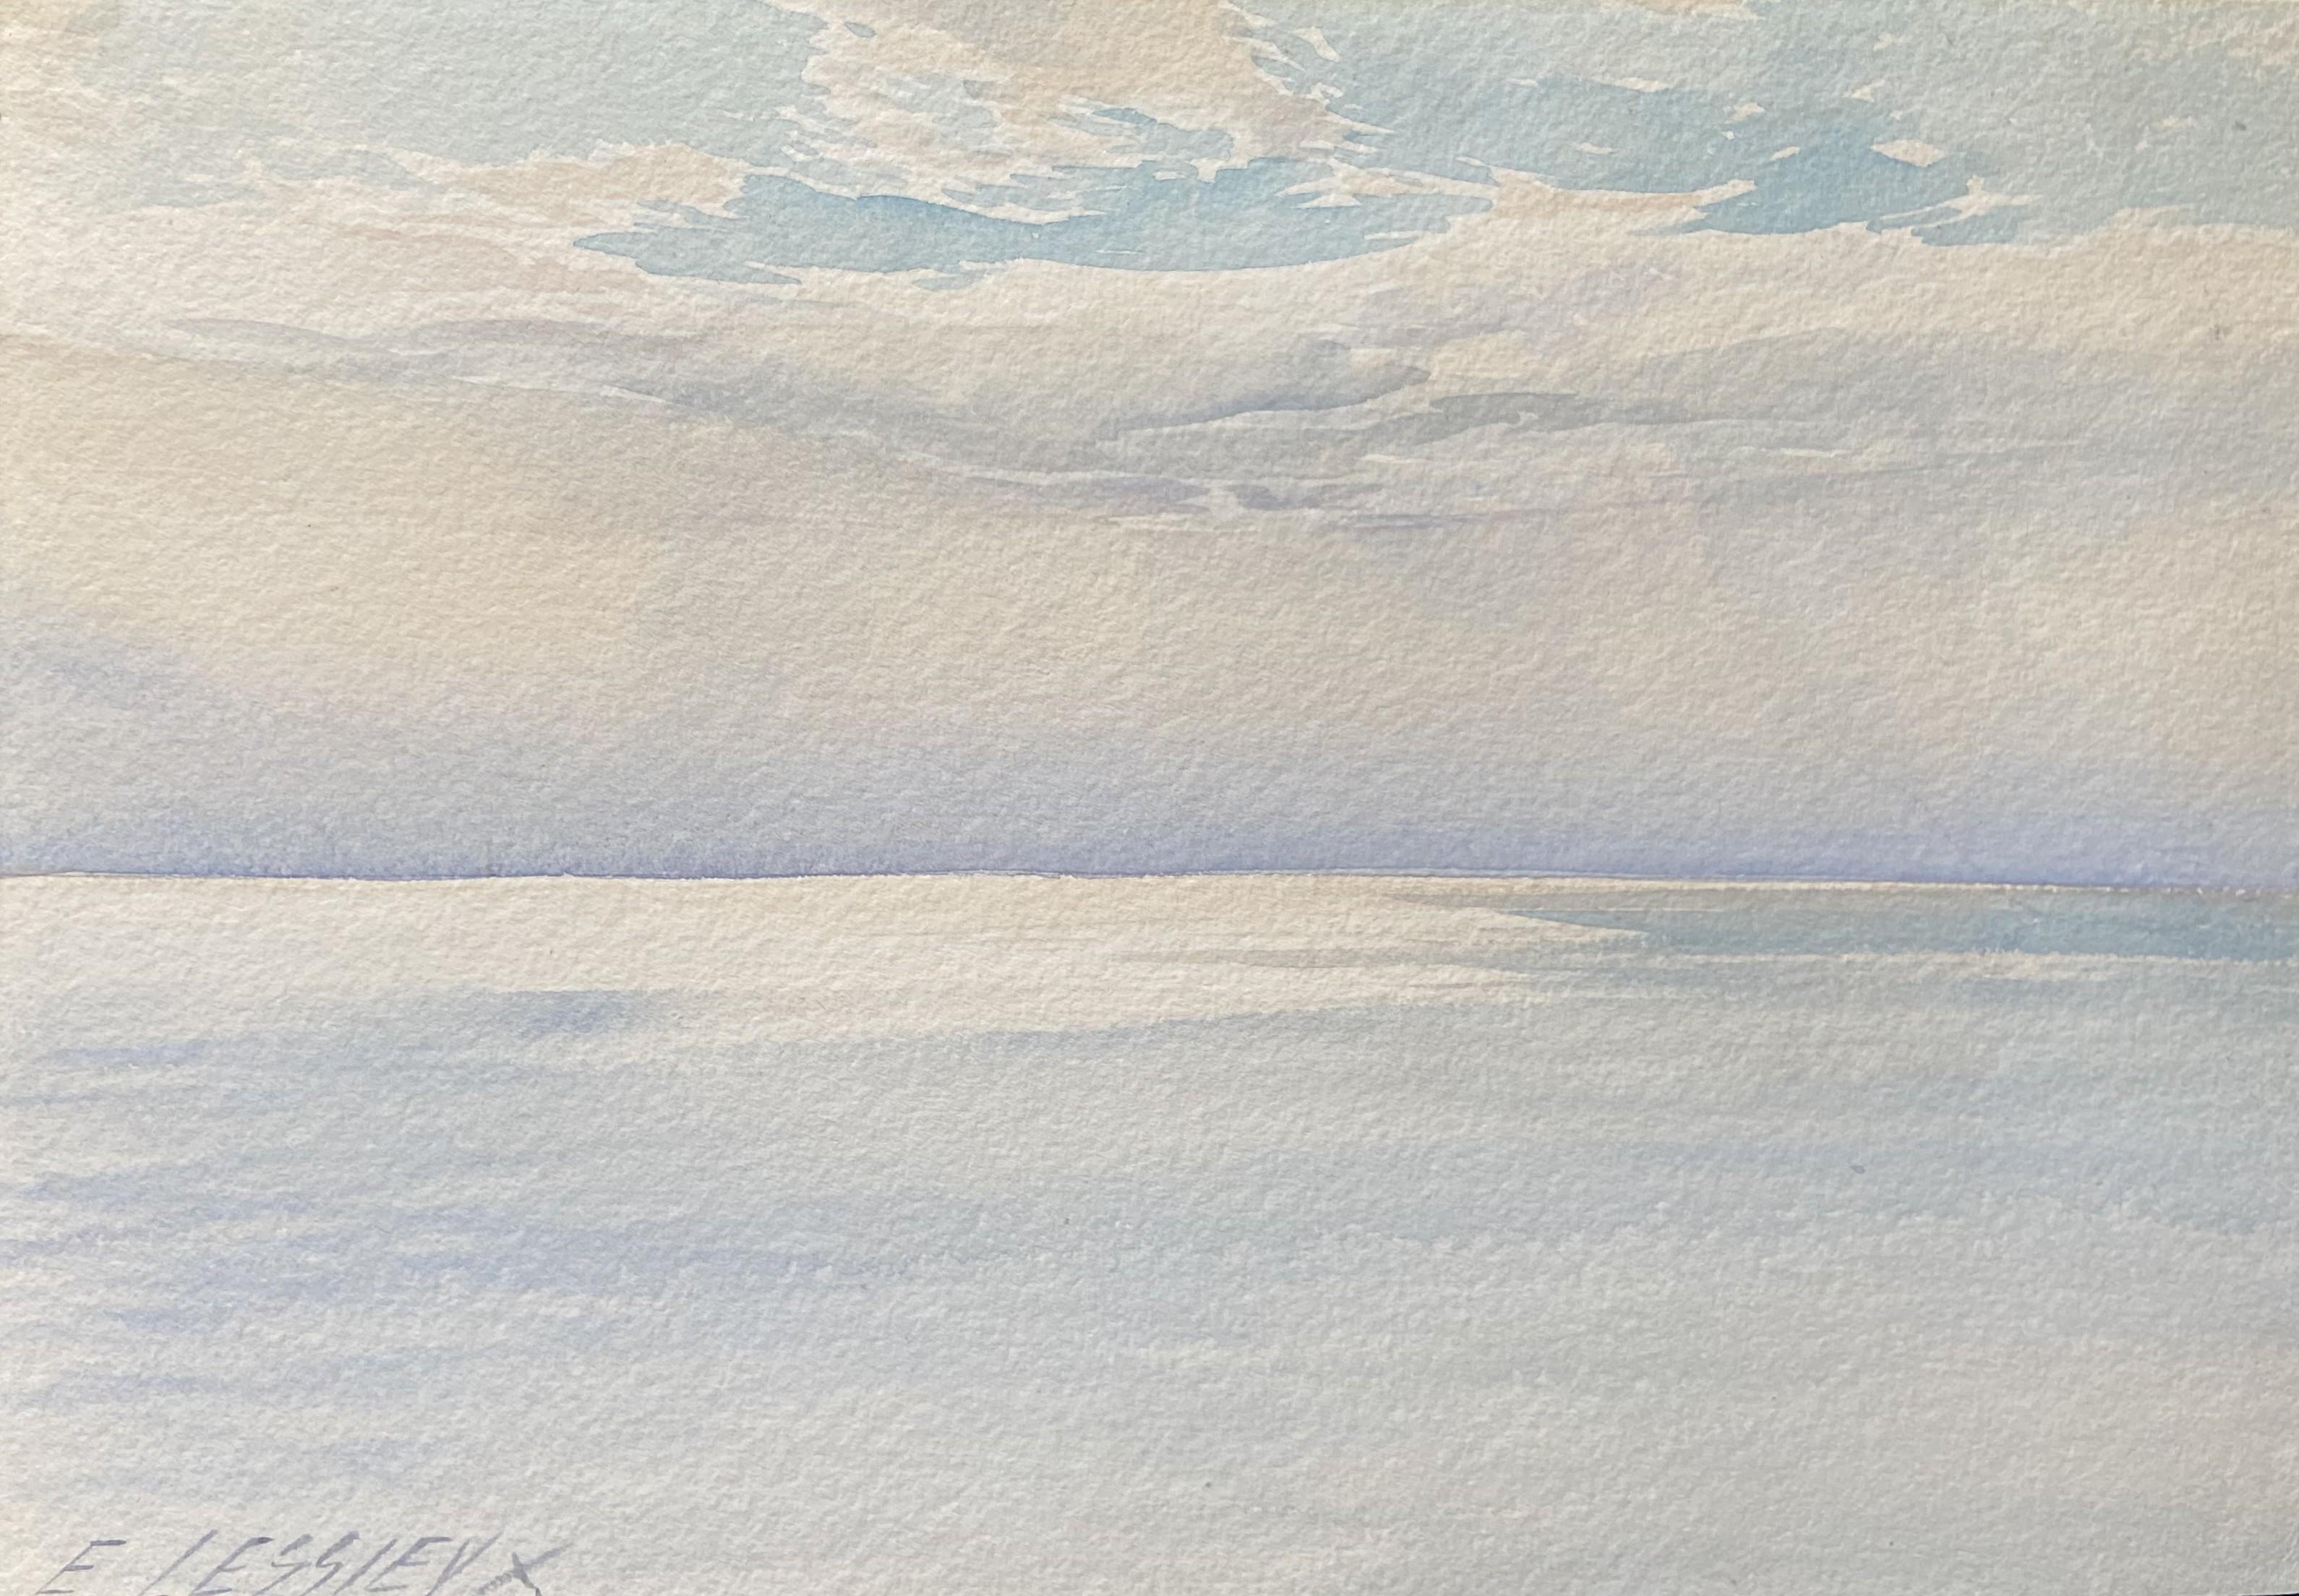 Ernest-Louis Lessieux Landscape Art – Ernest Lessieux (1848 - 1925) Das Meer bei ruhigem Wetter, Aquarell signiert